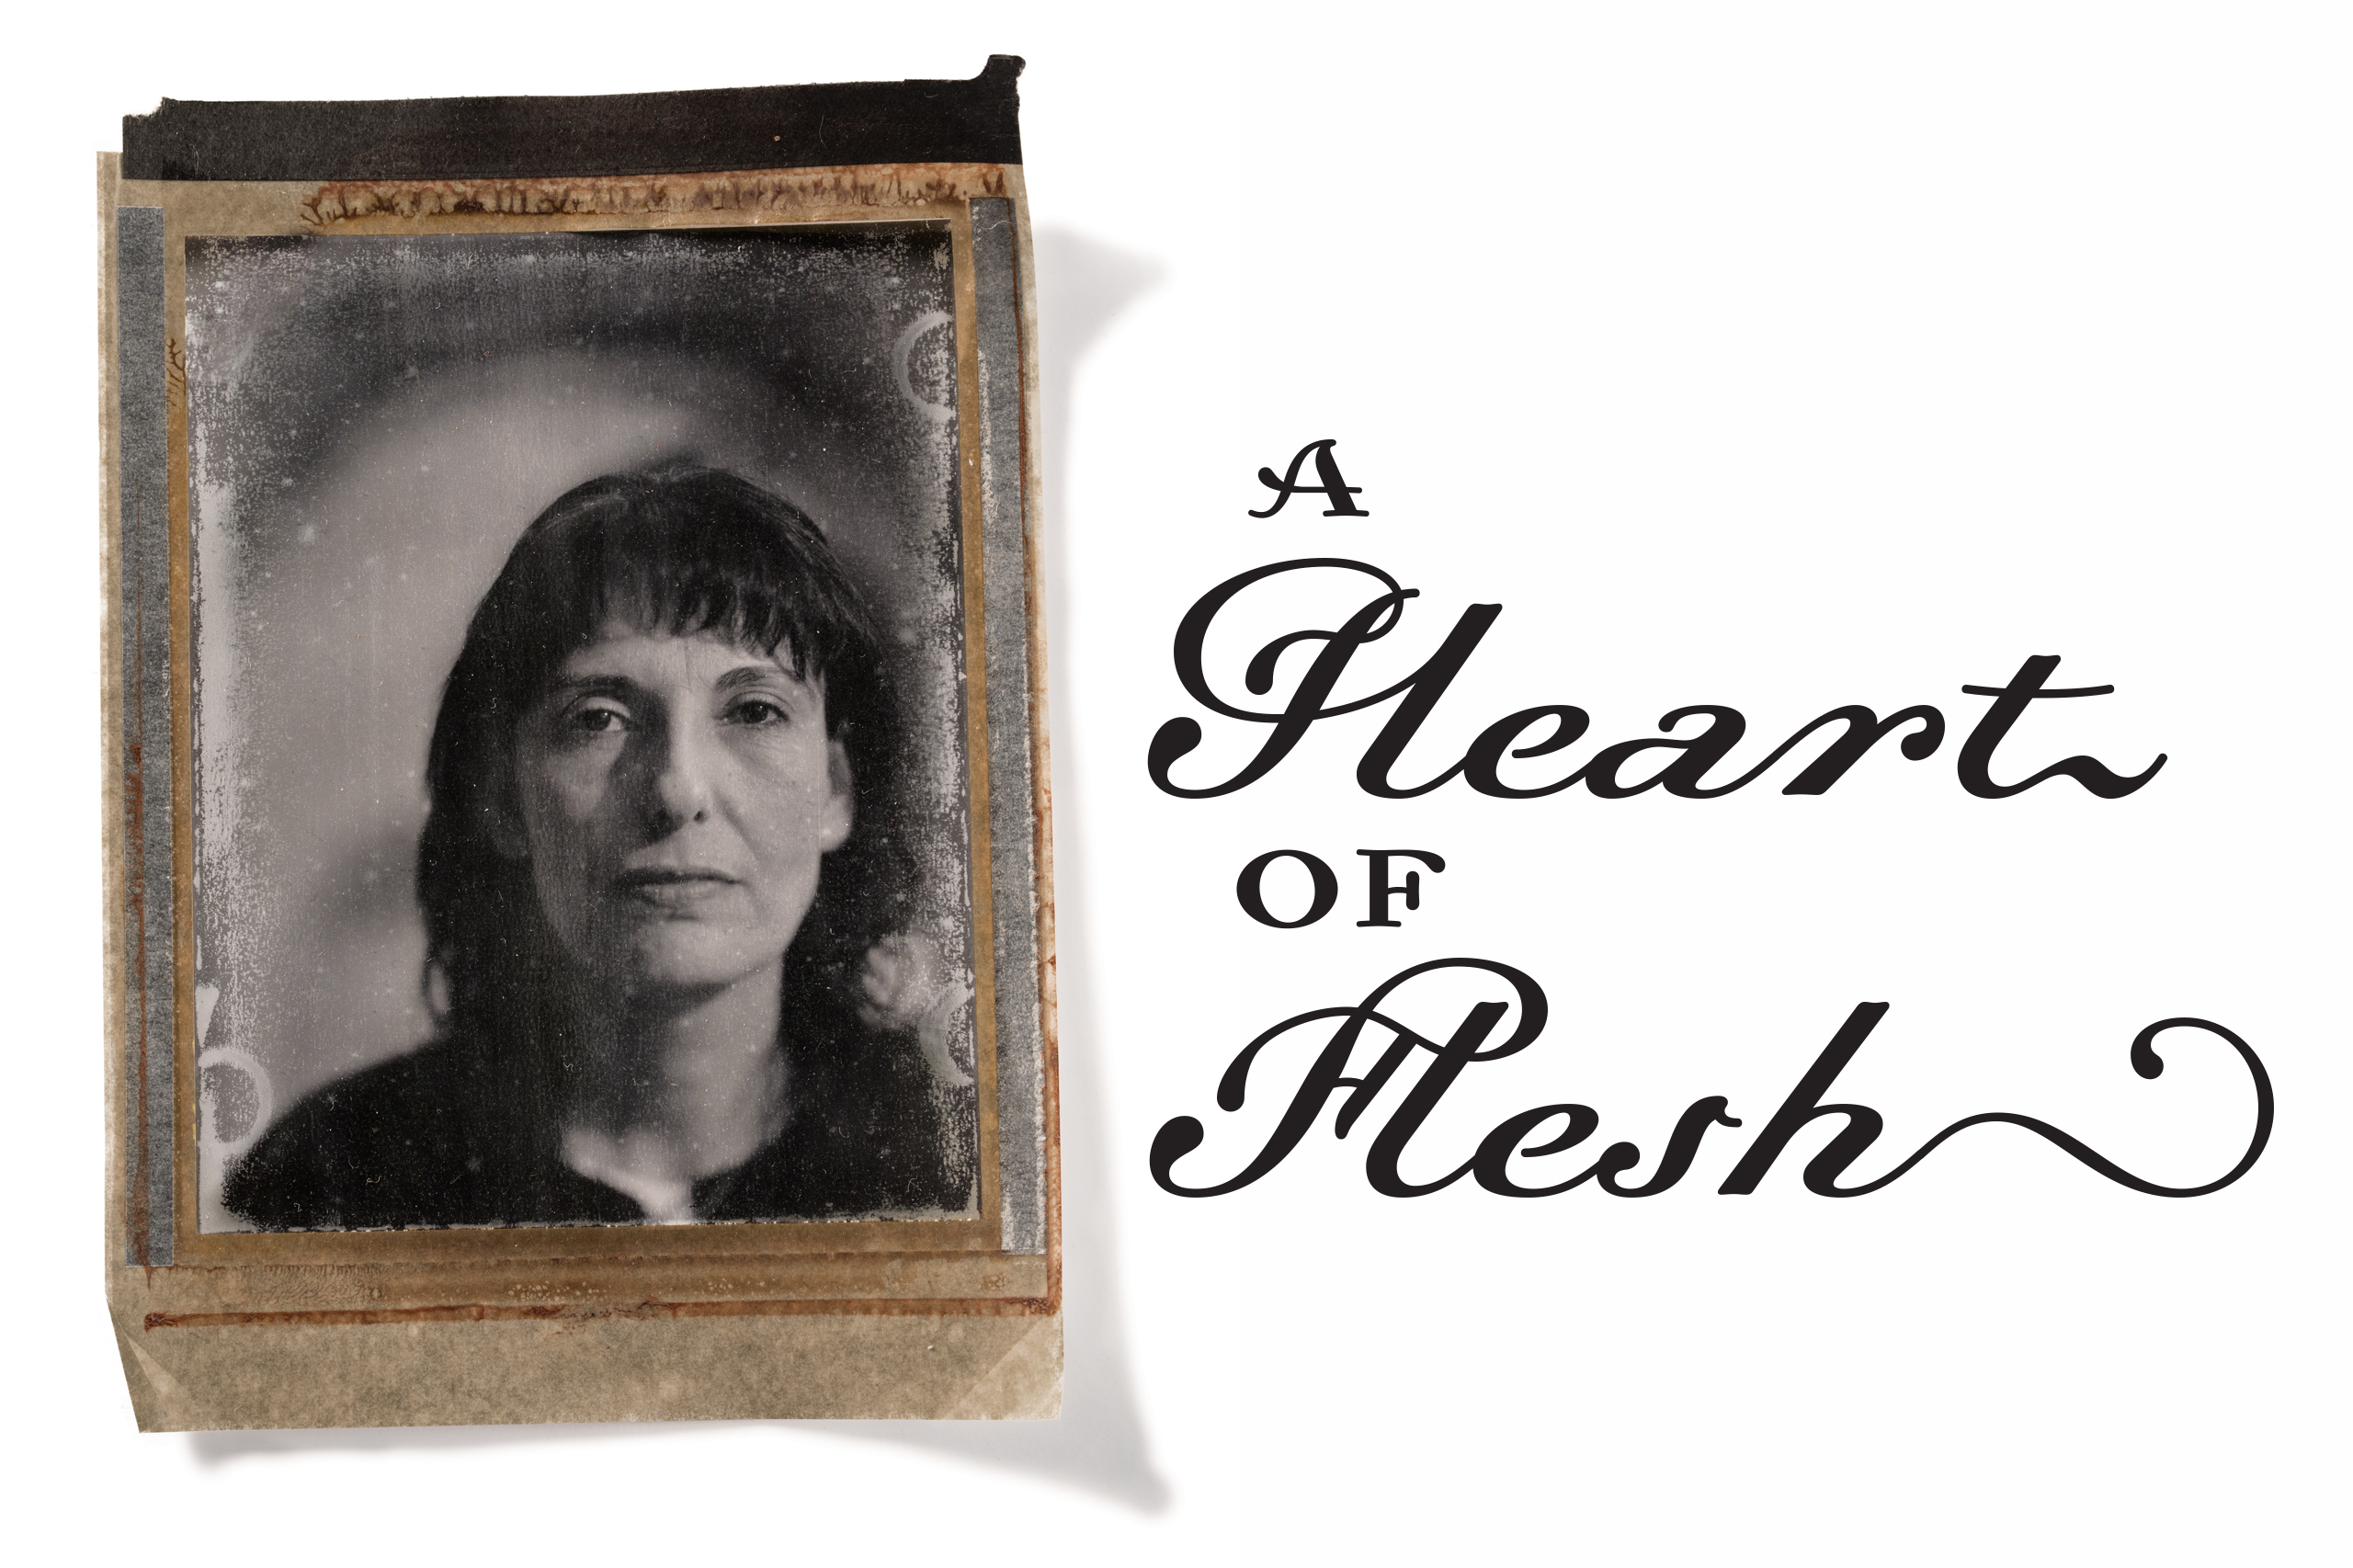 Sahar Qumsiyeh and title, "A Heart of Flesh"